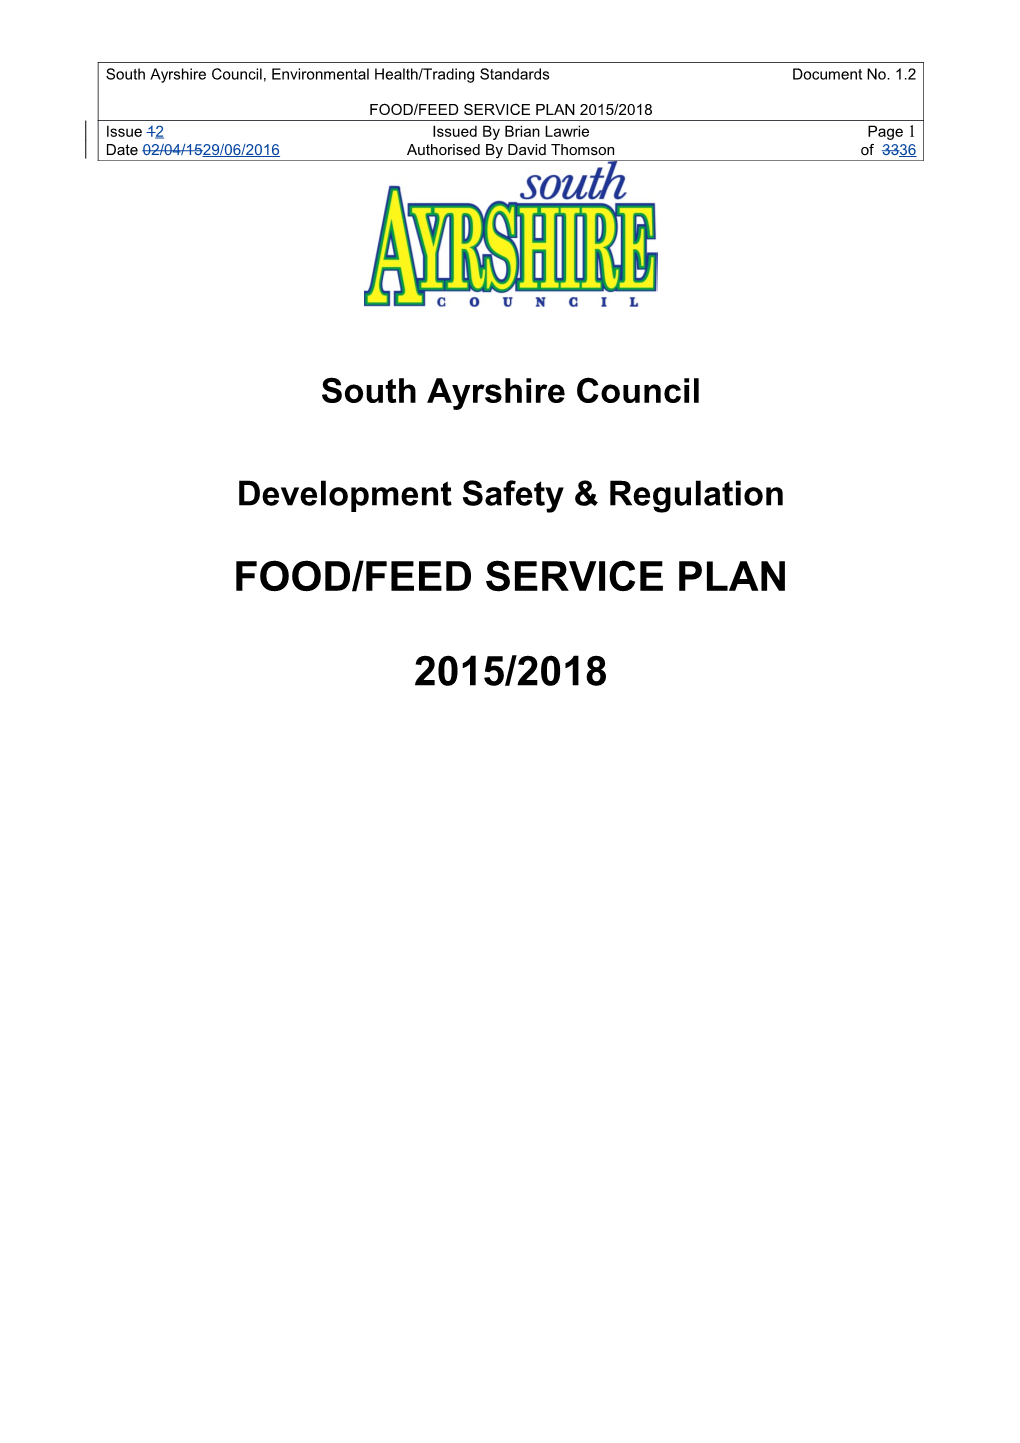 Food Service Plan